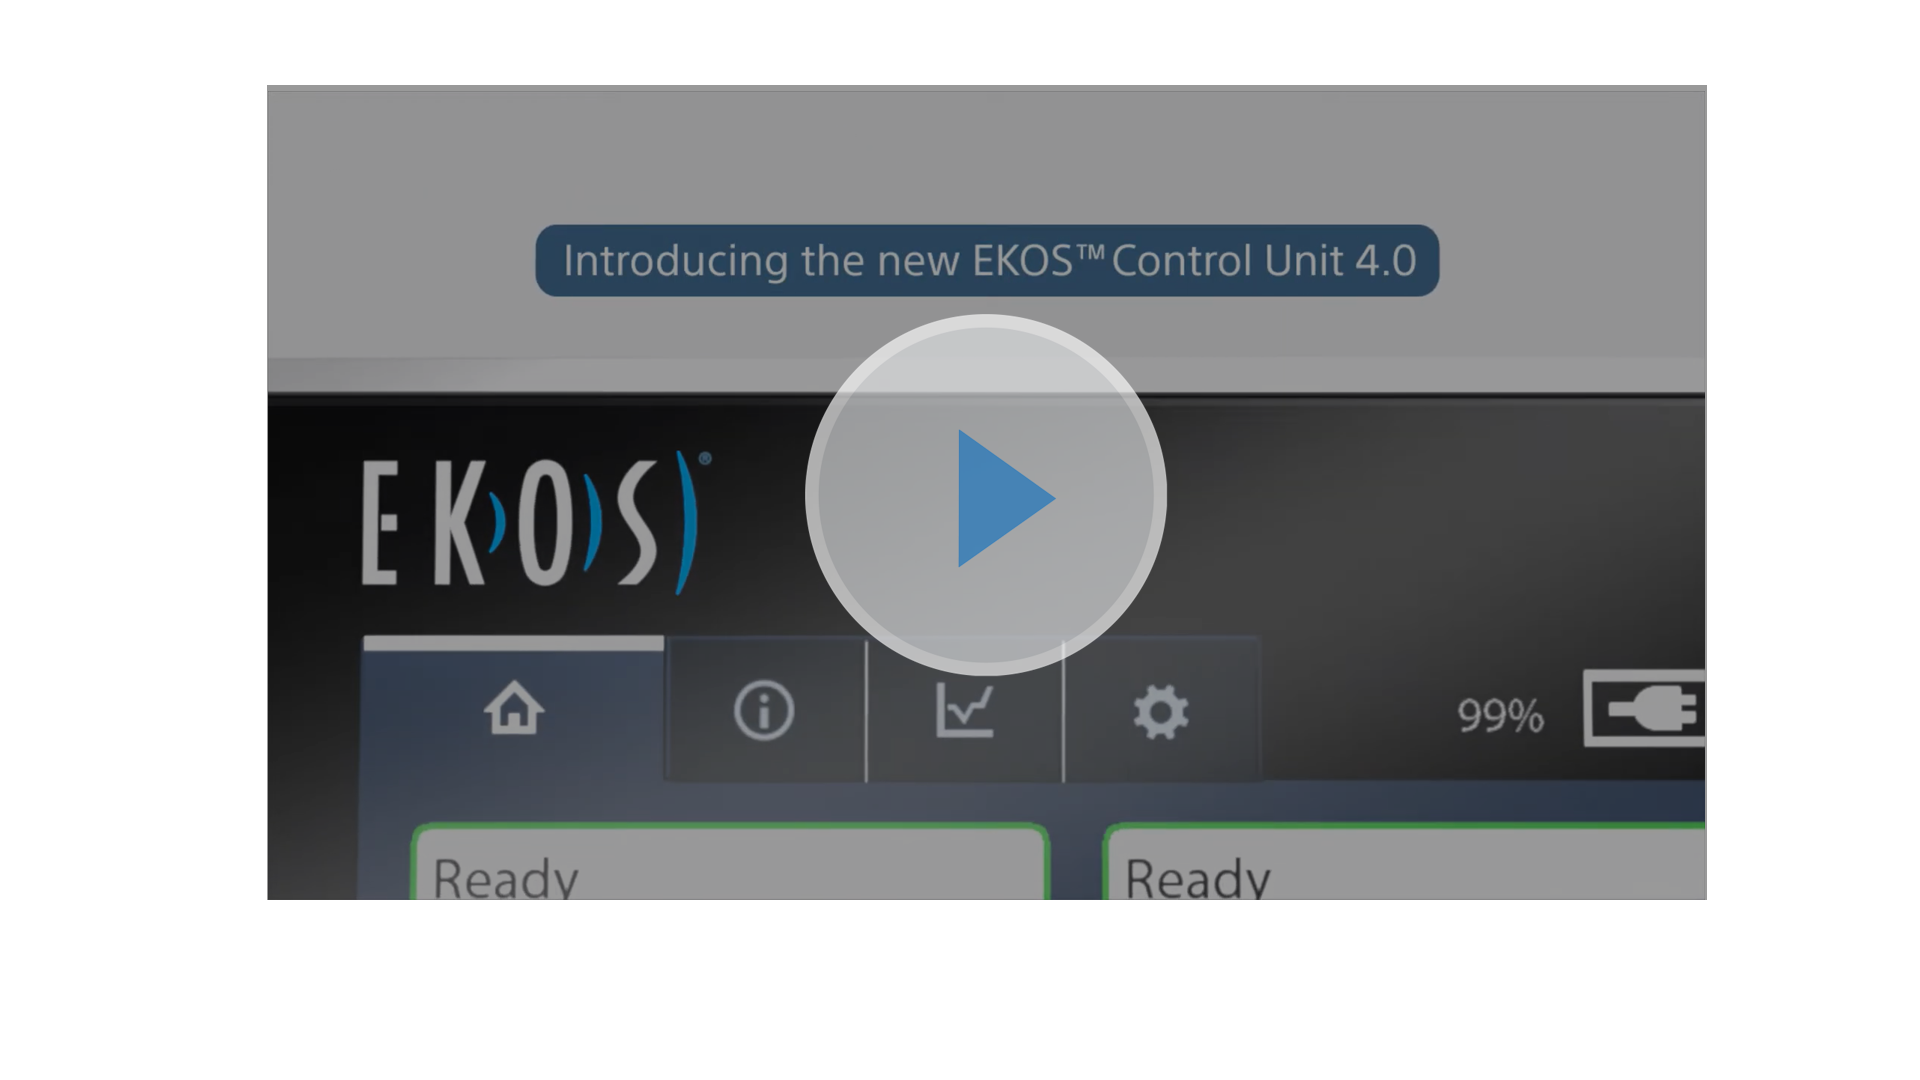 Interface of EKOS control unit 4.0